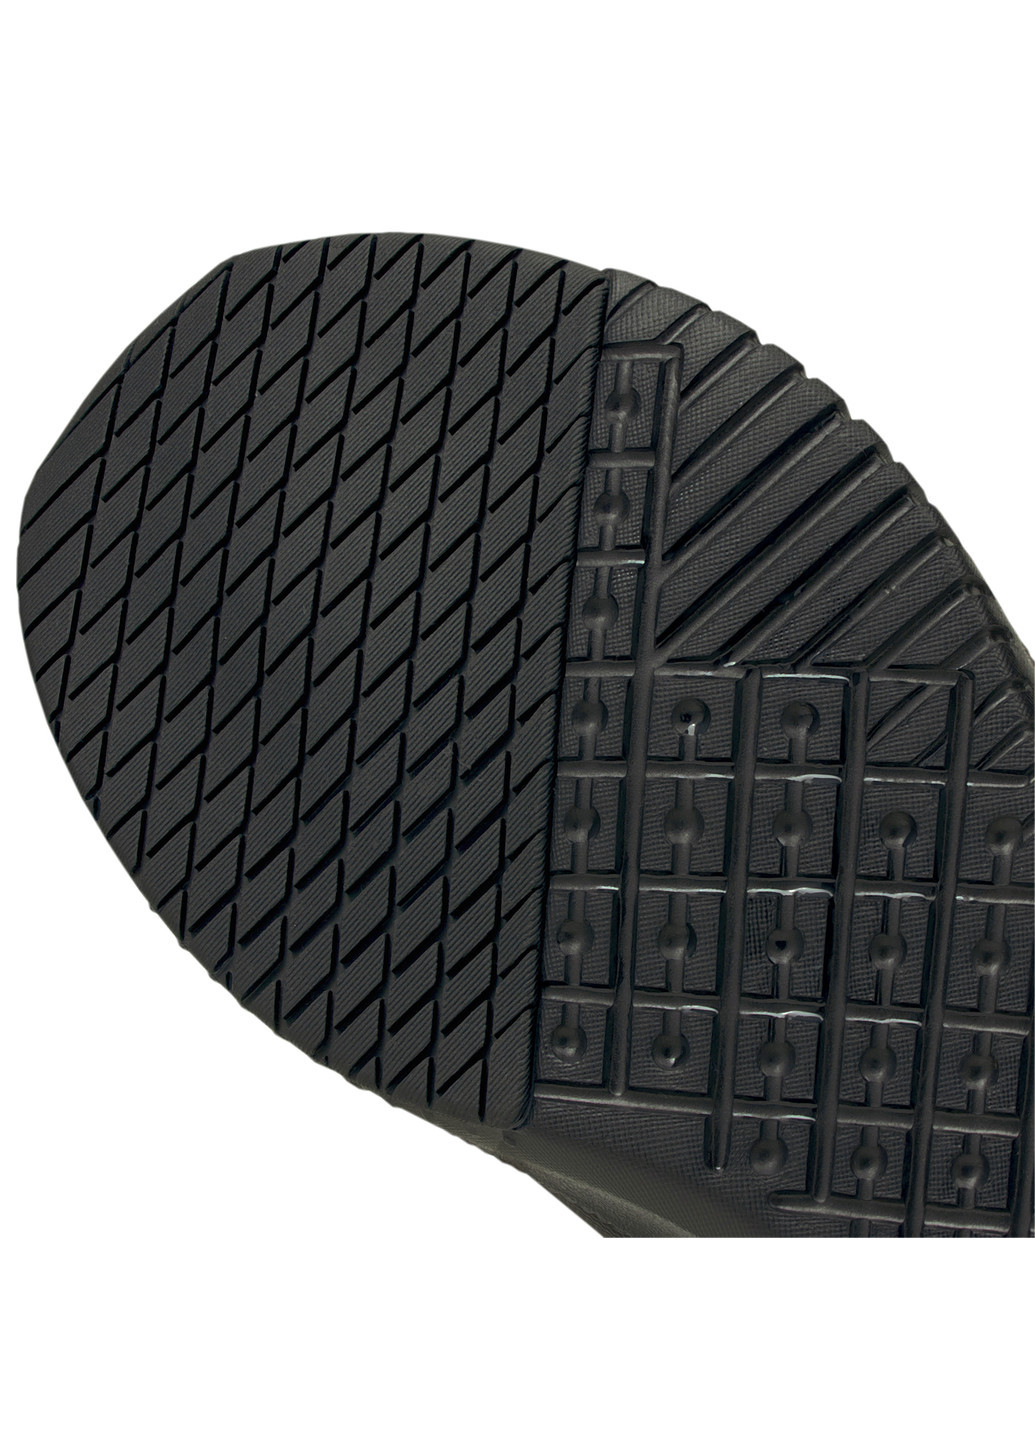 Чорні всесезонні кросівки flyer flex running shoes Puma